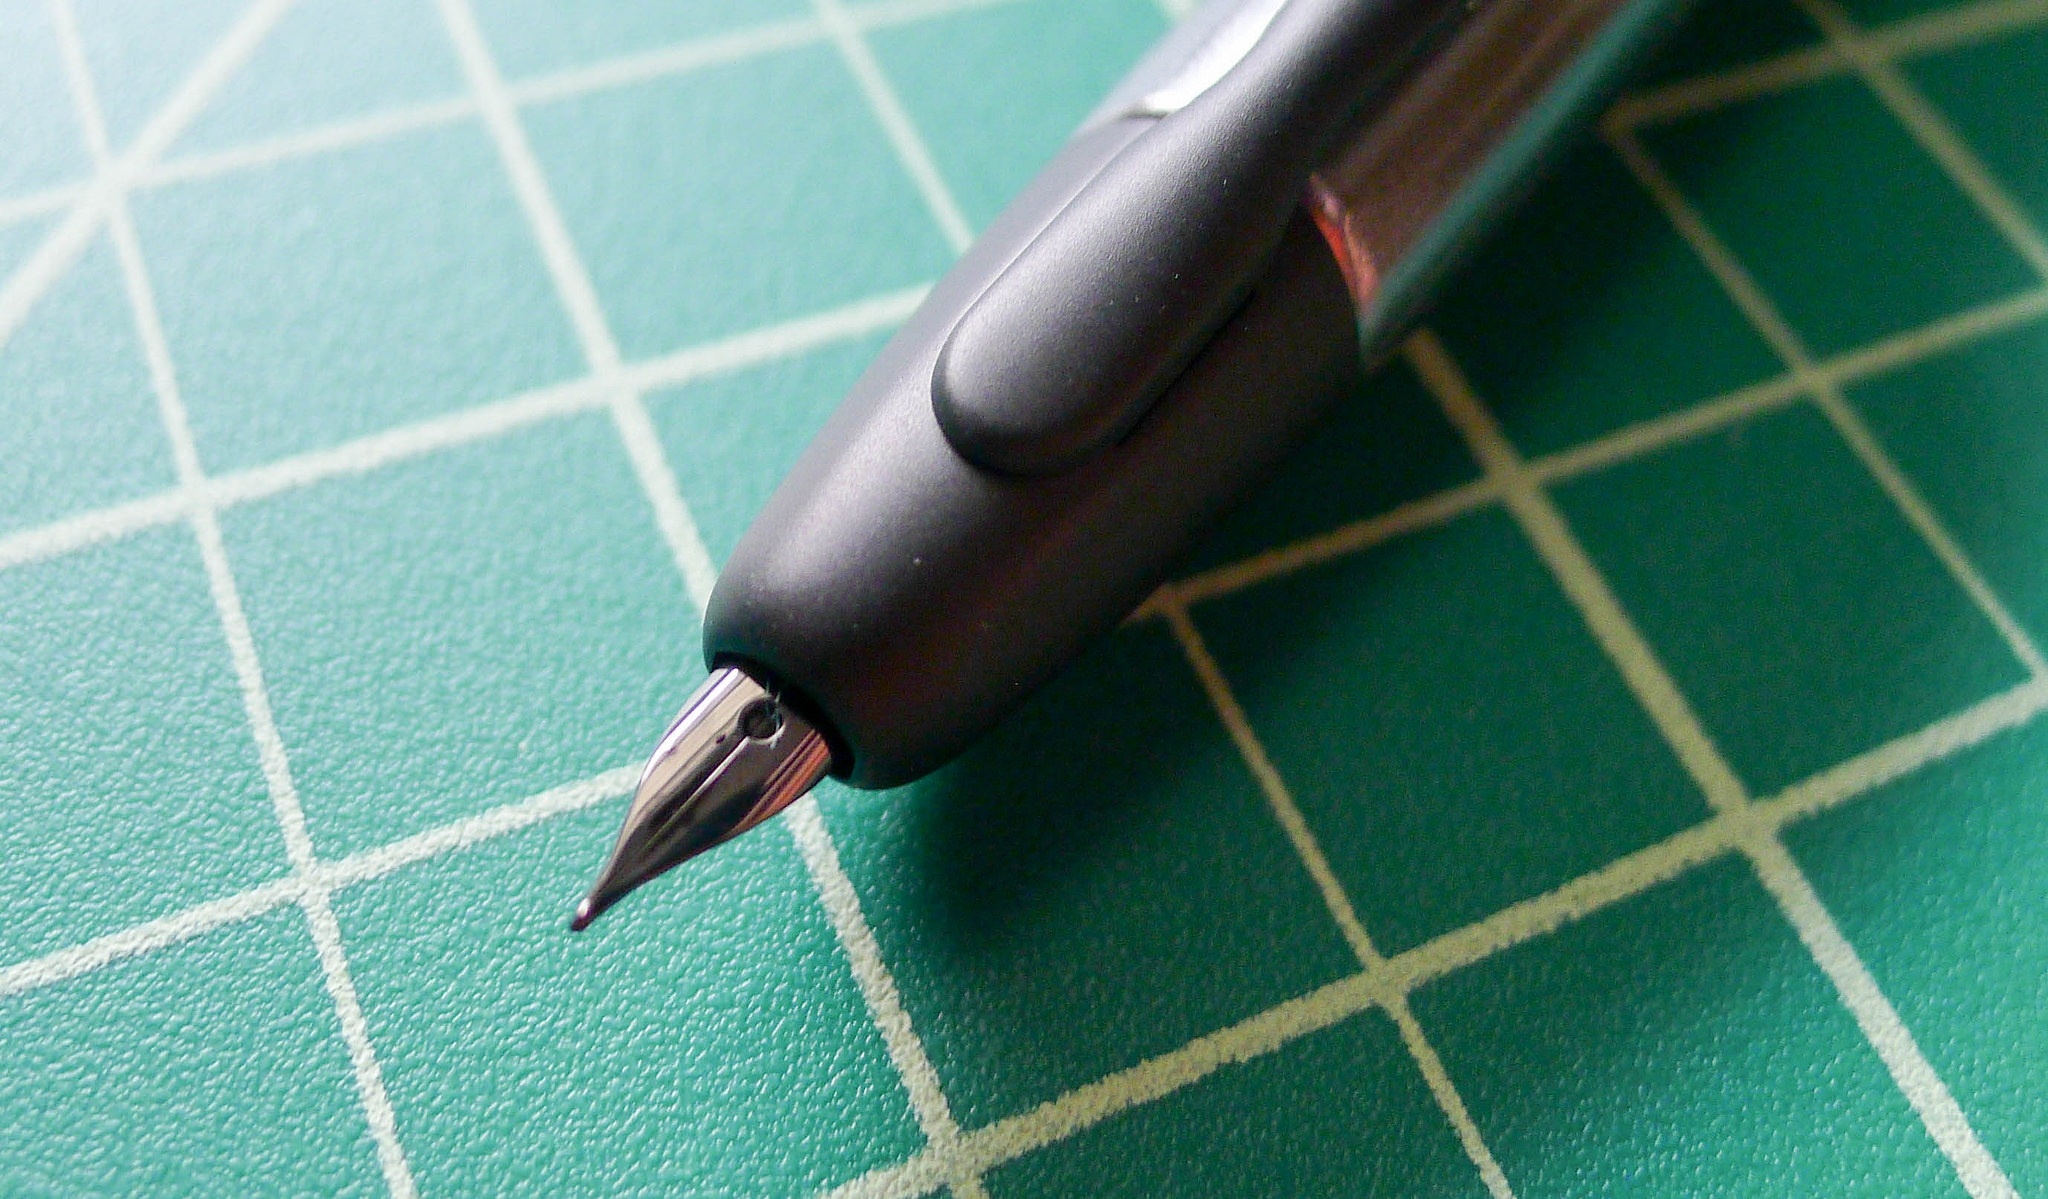 Pilot Vanishing Point Fountain Pen - Black Matte - The Goulet Pen